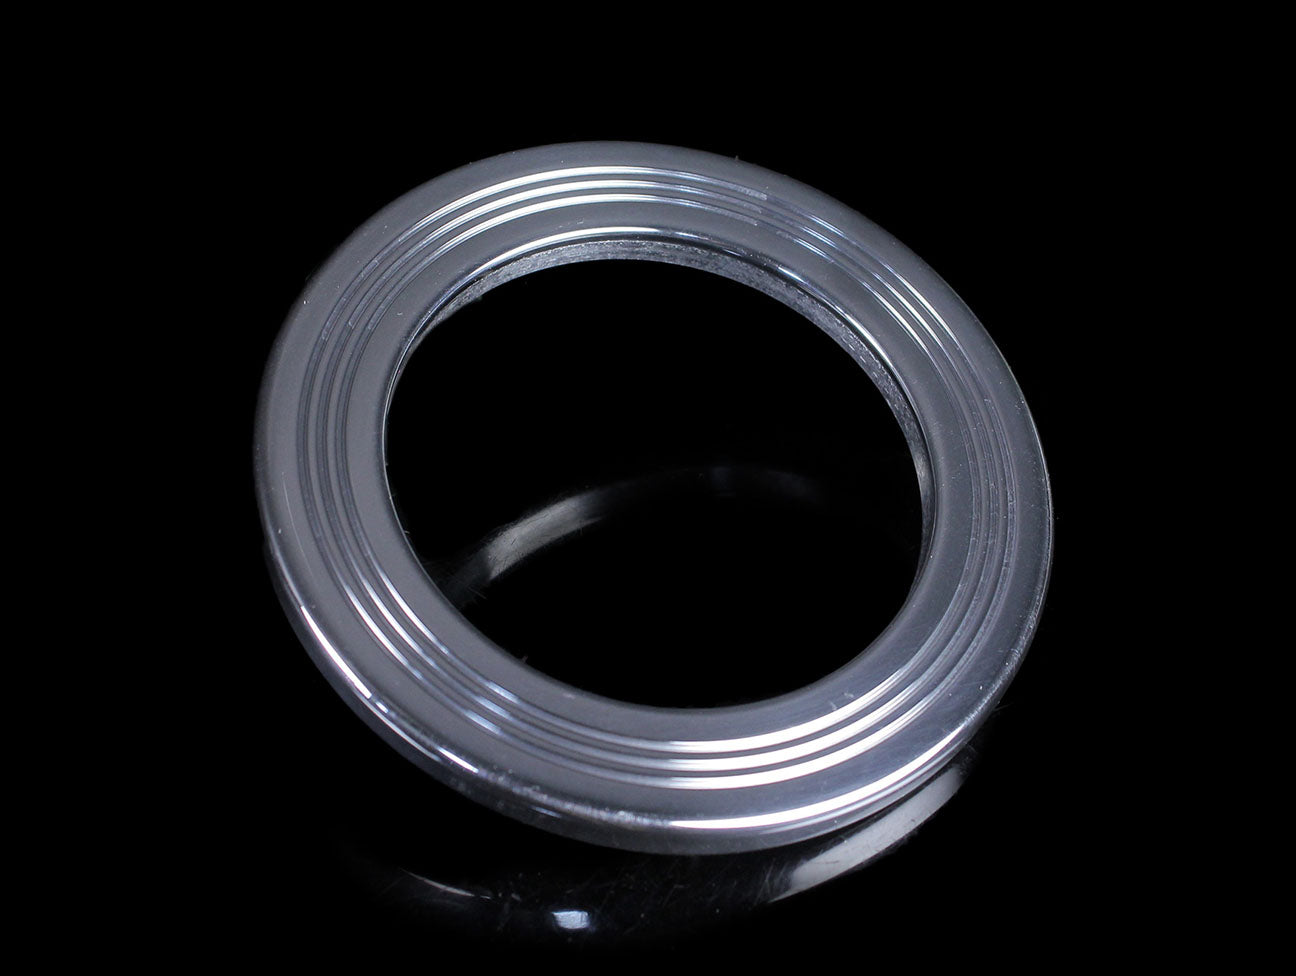 Nardi Polished Horn Button Trim Ring